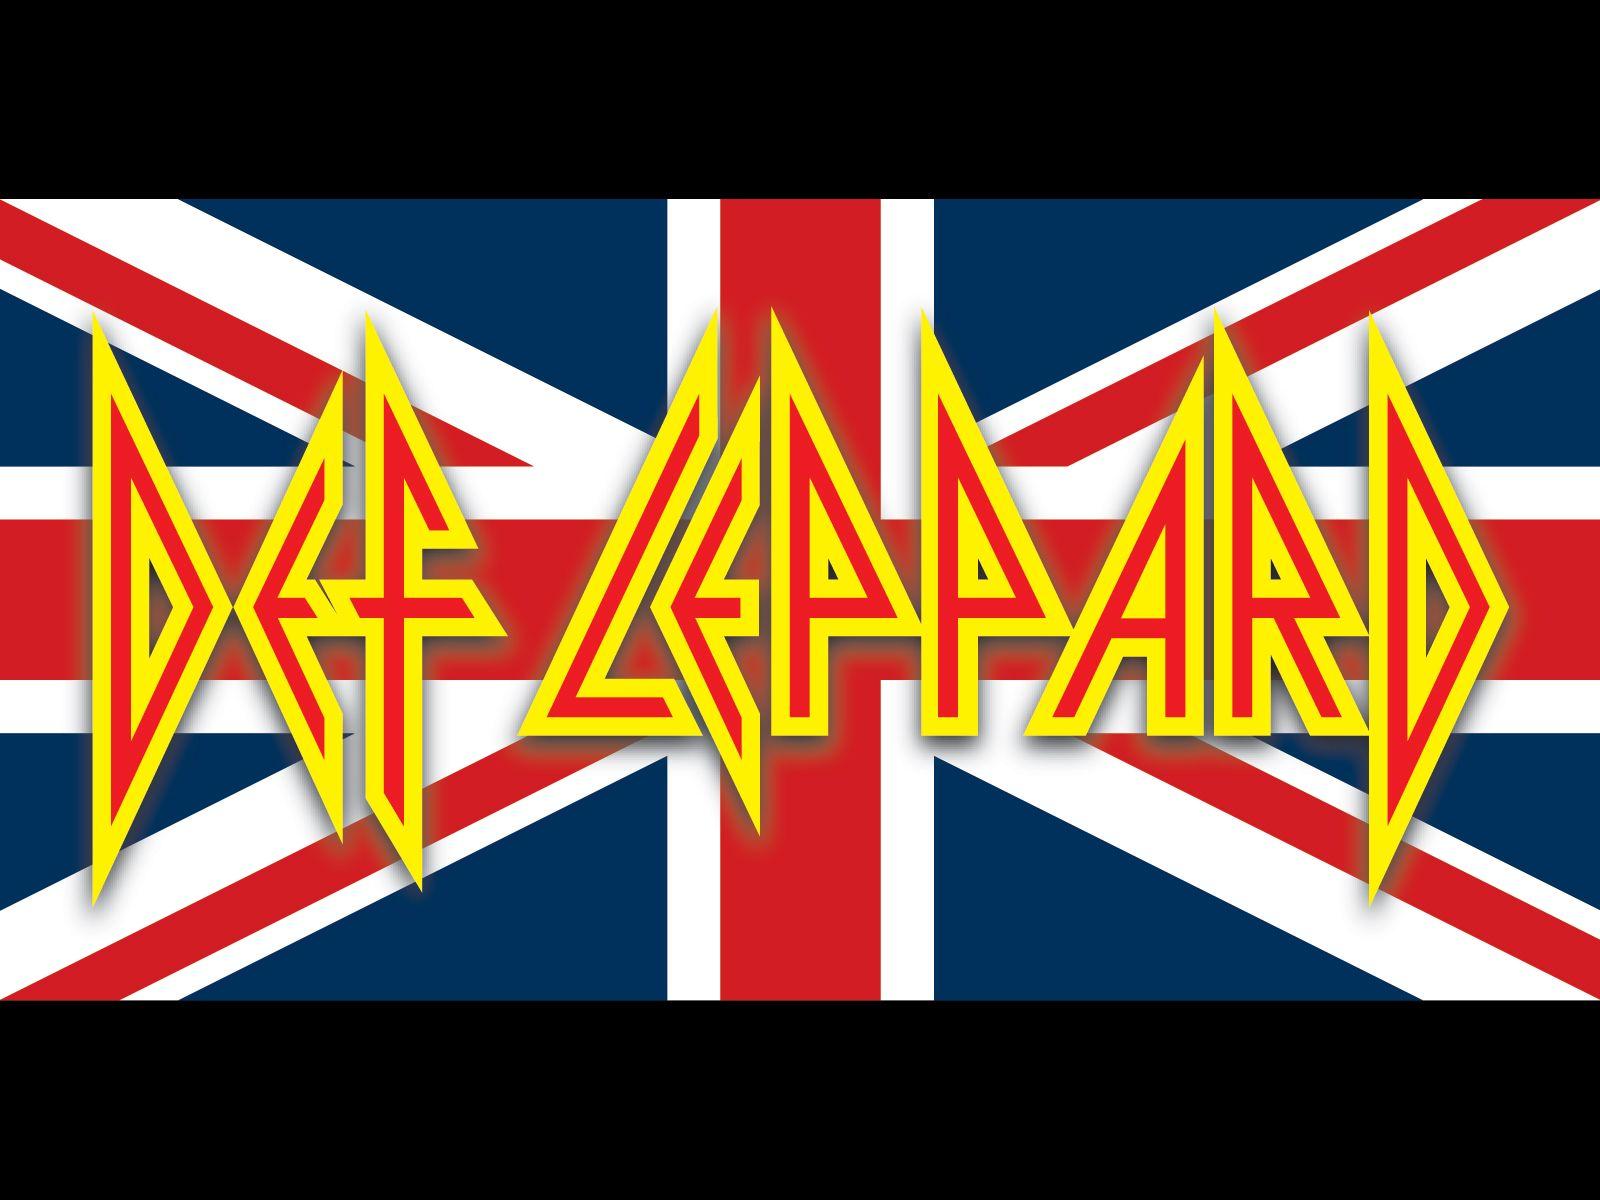 Savage Band's Logo - Def Leppard logo and wallpaper | rock | Def Leppard, Rock Music, Music